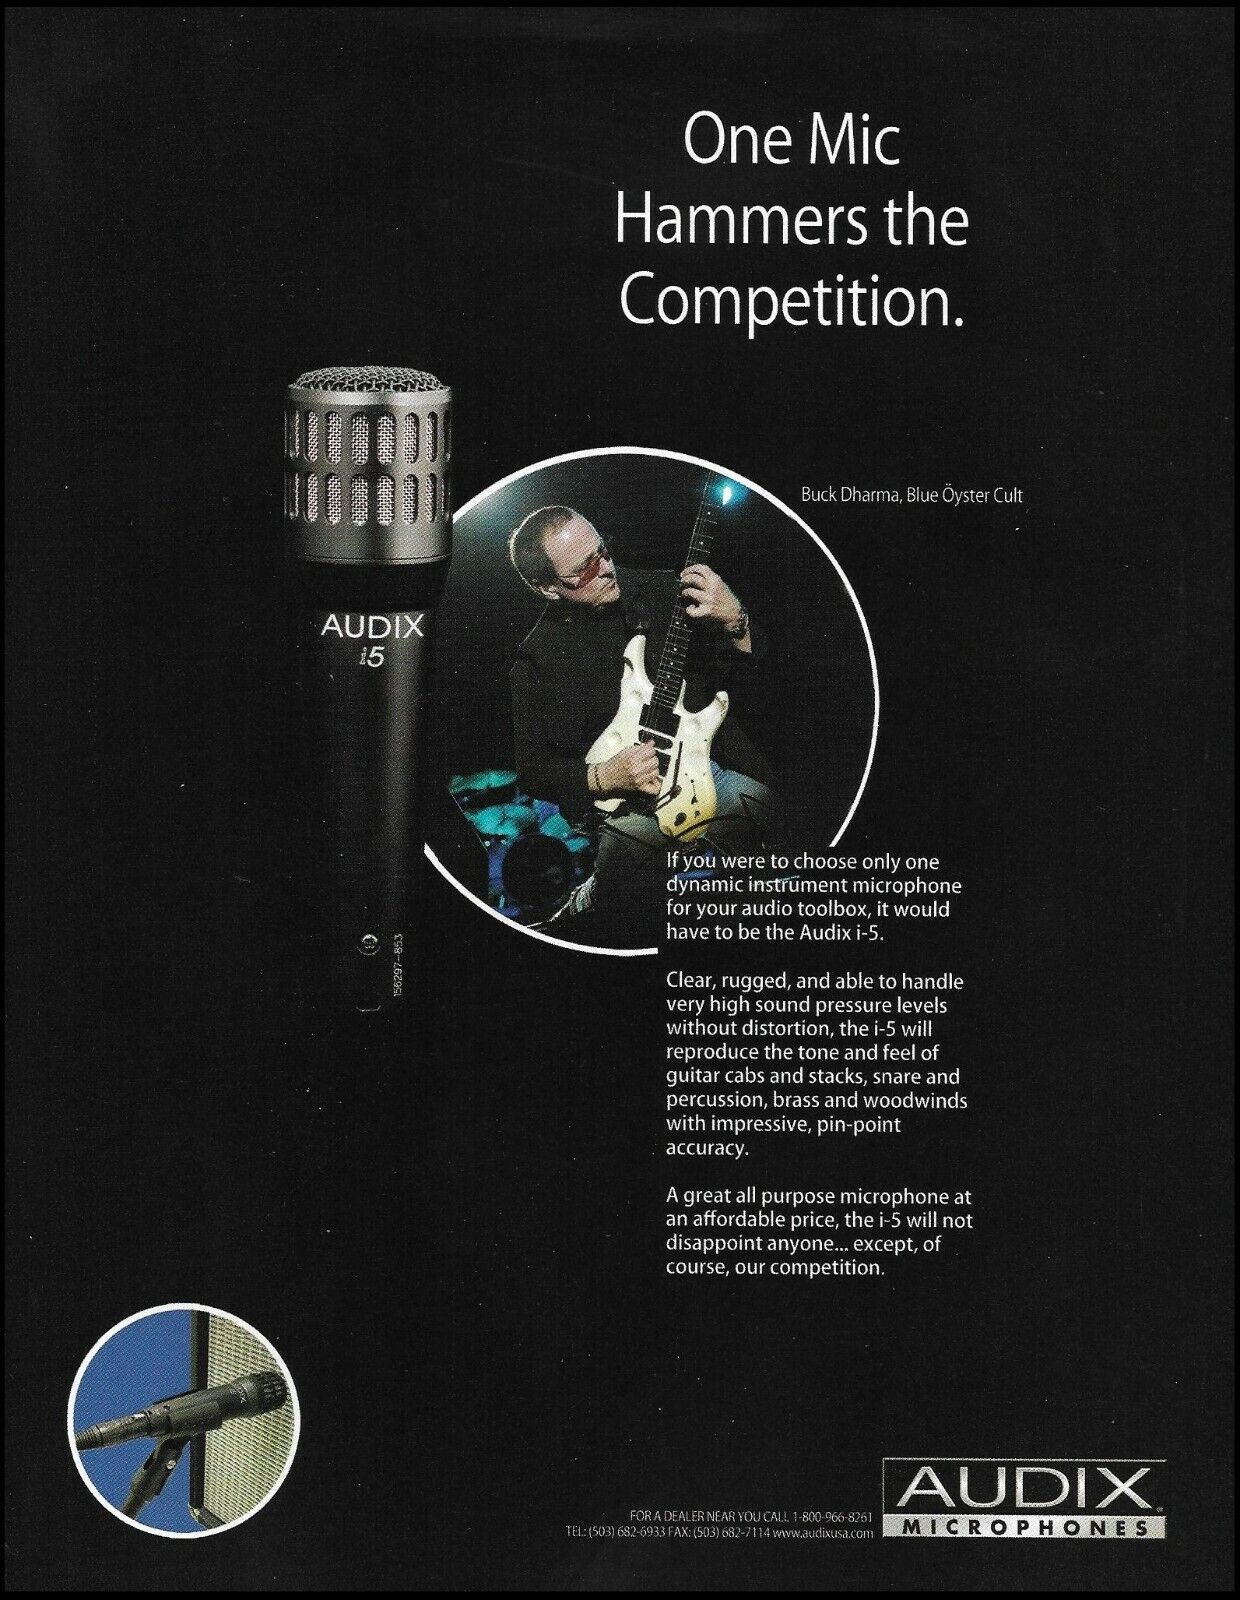 Blue Oyster Cult Buck Dharma 2010 Audix Microphone ad 8 x 11 advertisement print